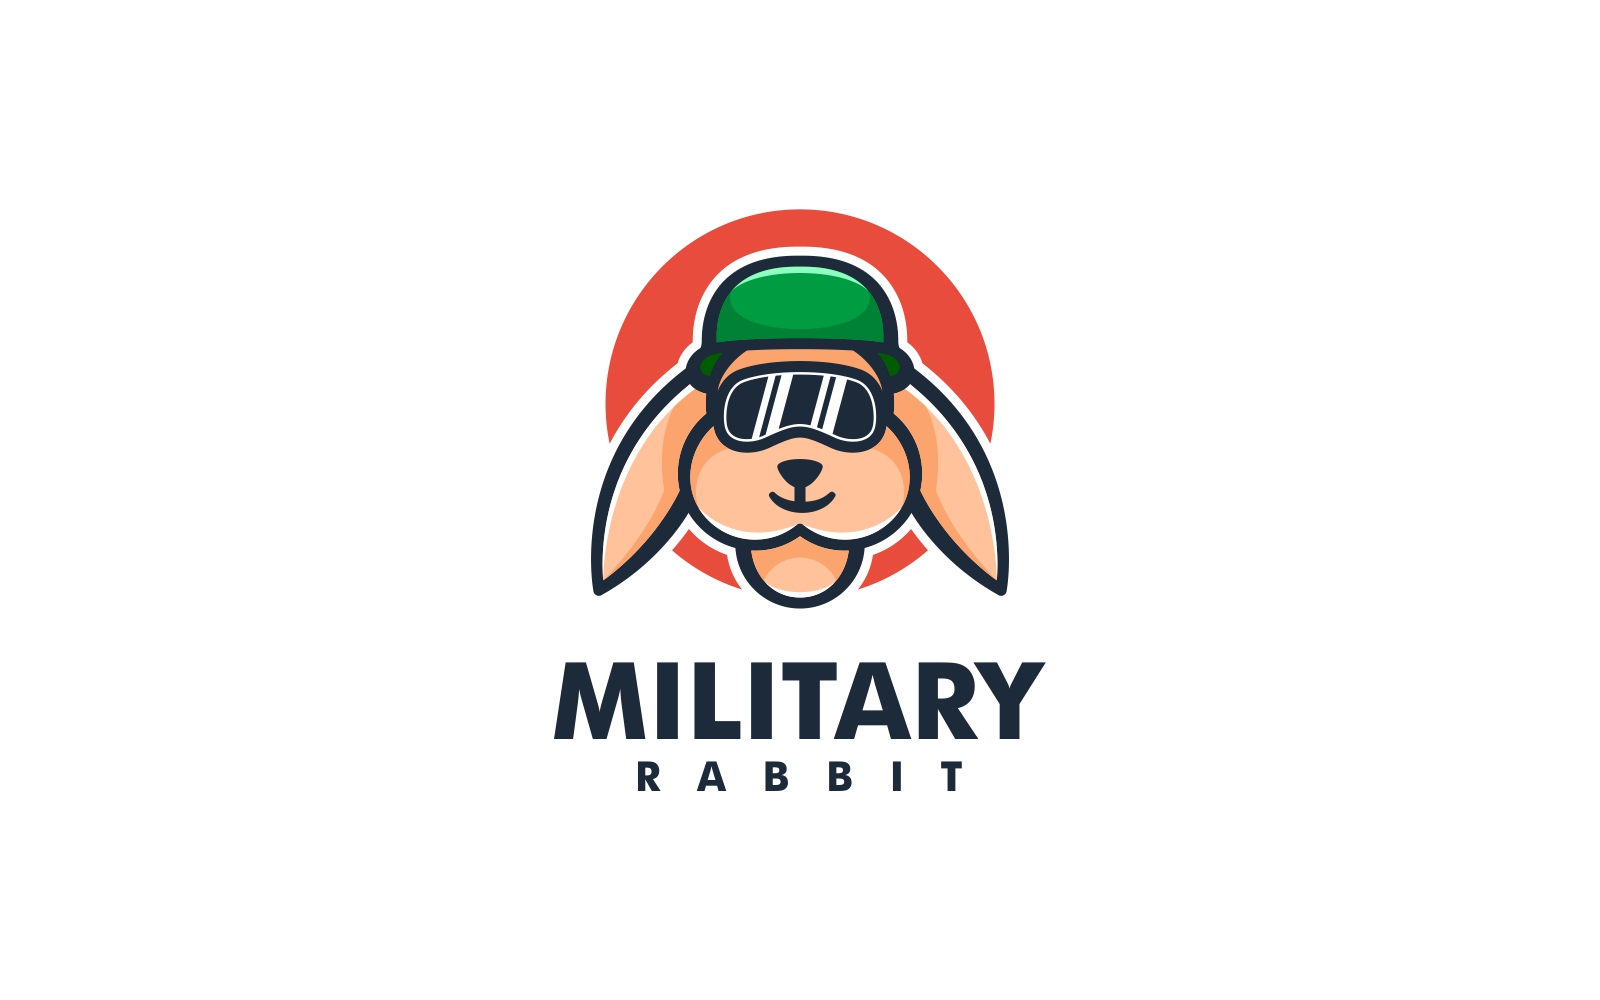 Rabbit Military Cartoon Logo